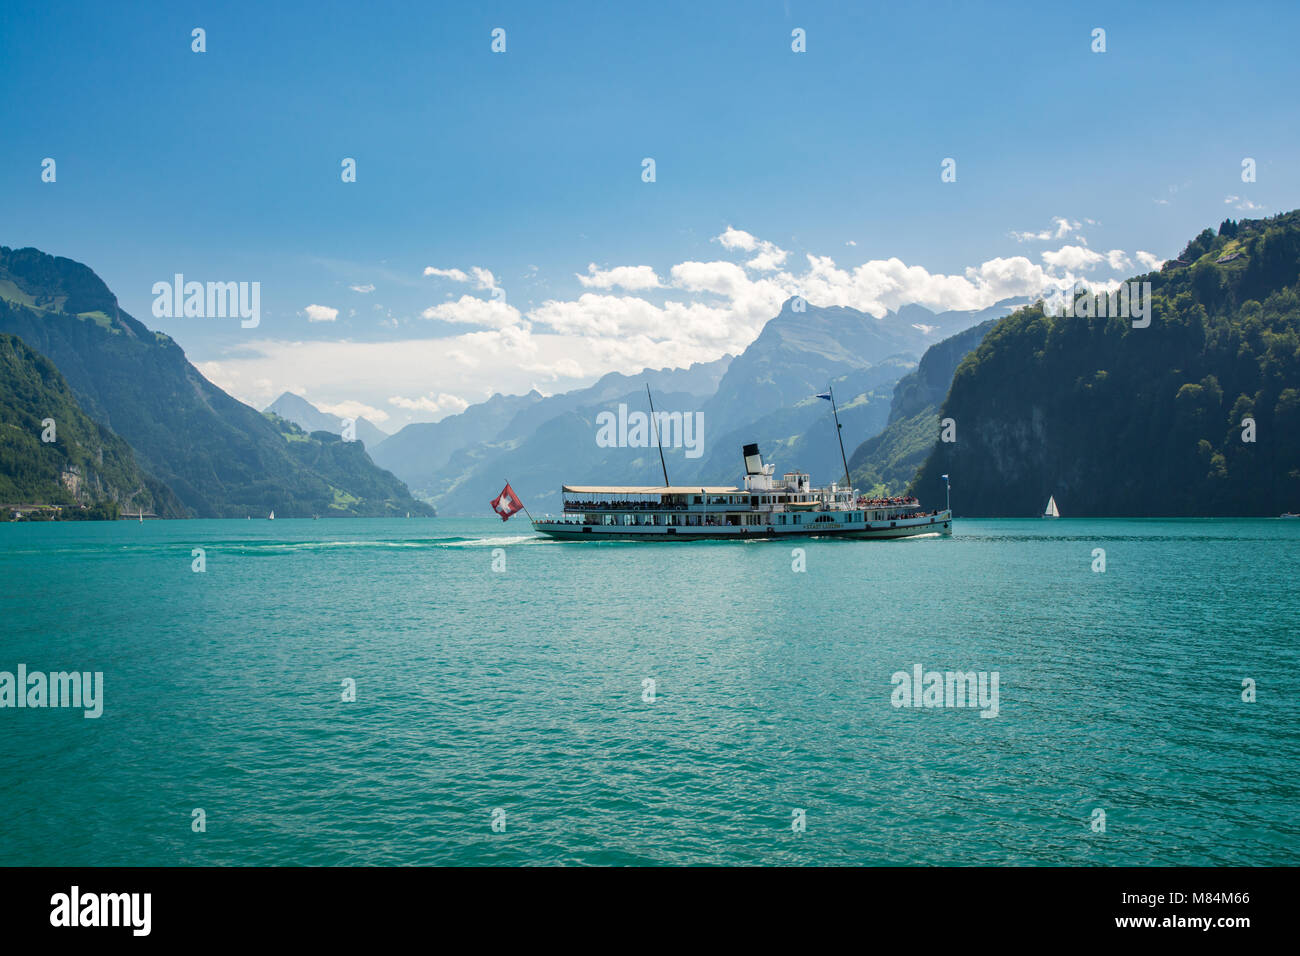 BRUNNEN, SWITZERLAND - AUGUST 2017 - Ship full of tourists on Lake Lucerne near Brunnen in Switzerland Stock Photo